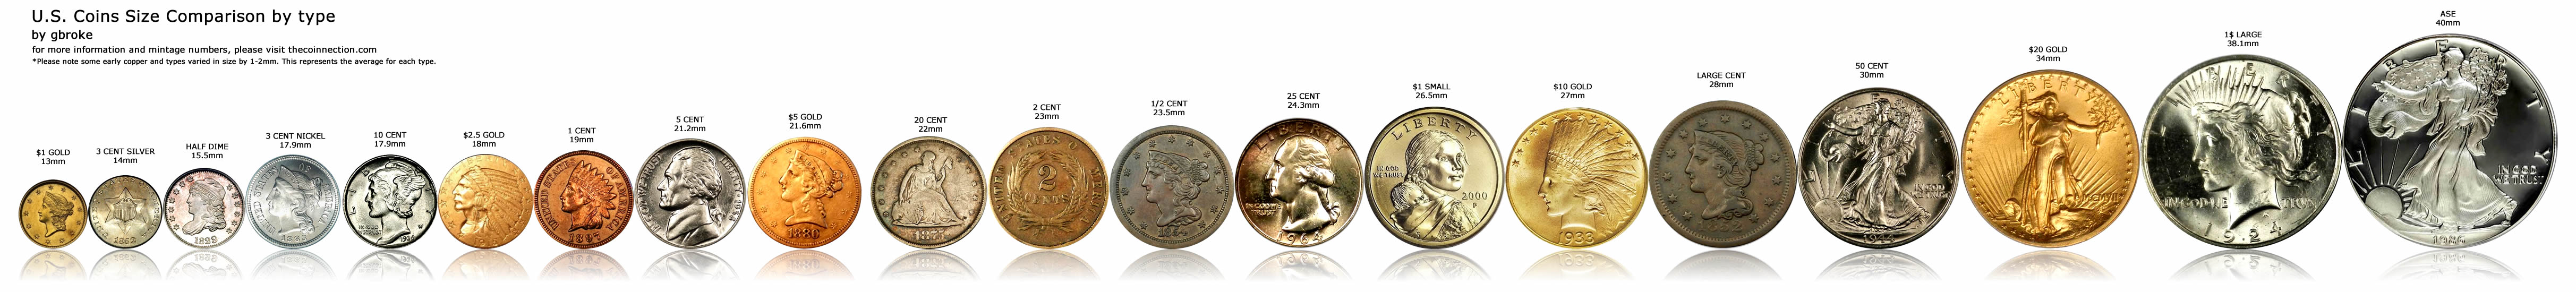 6 ton в рублях. Диаметр монет. Цент доллара монета. Монета диаметром 1.5 см. Размер монет США.